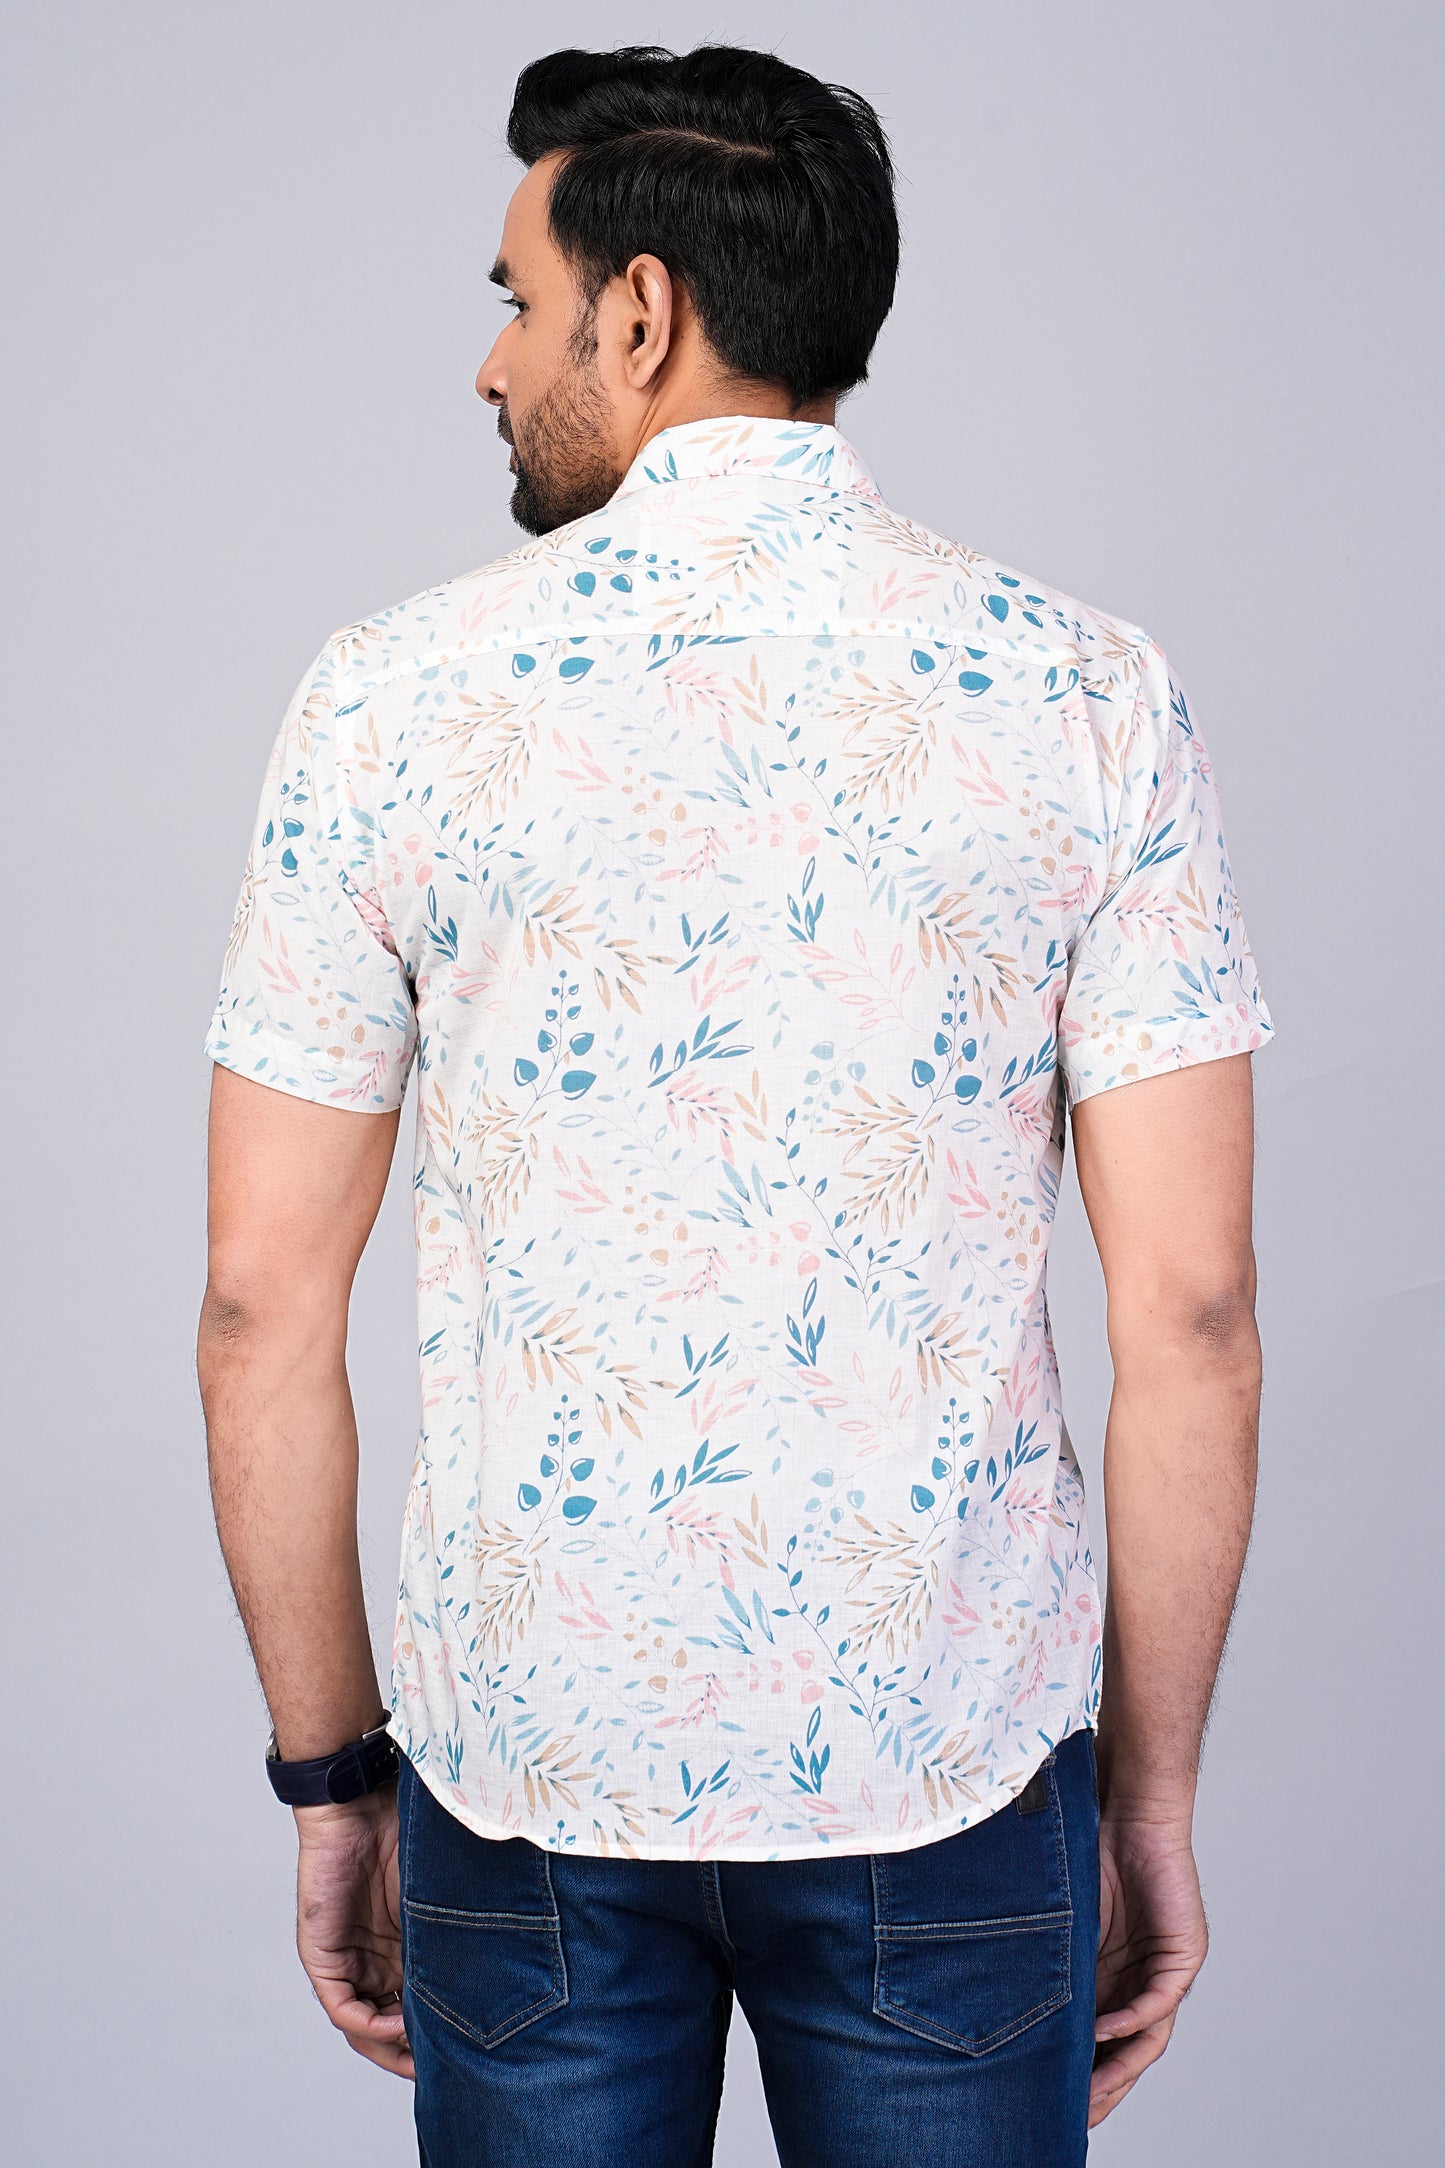 Men's Ethnic Leaf Printed Half-Sleeves shirts